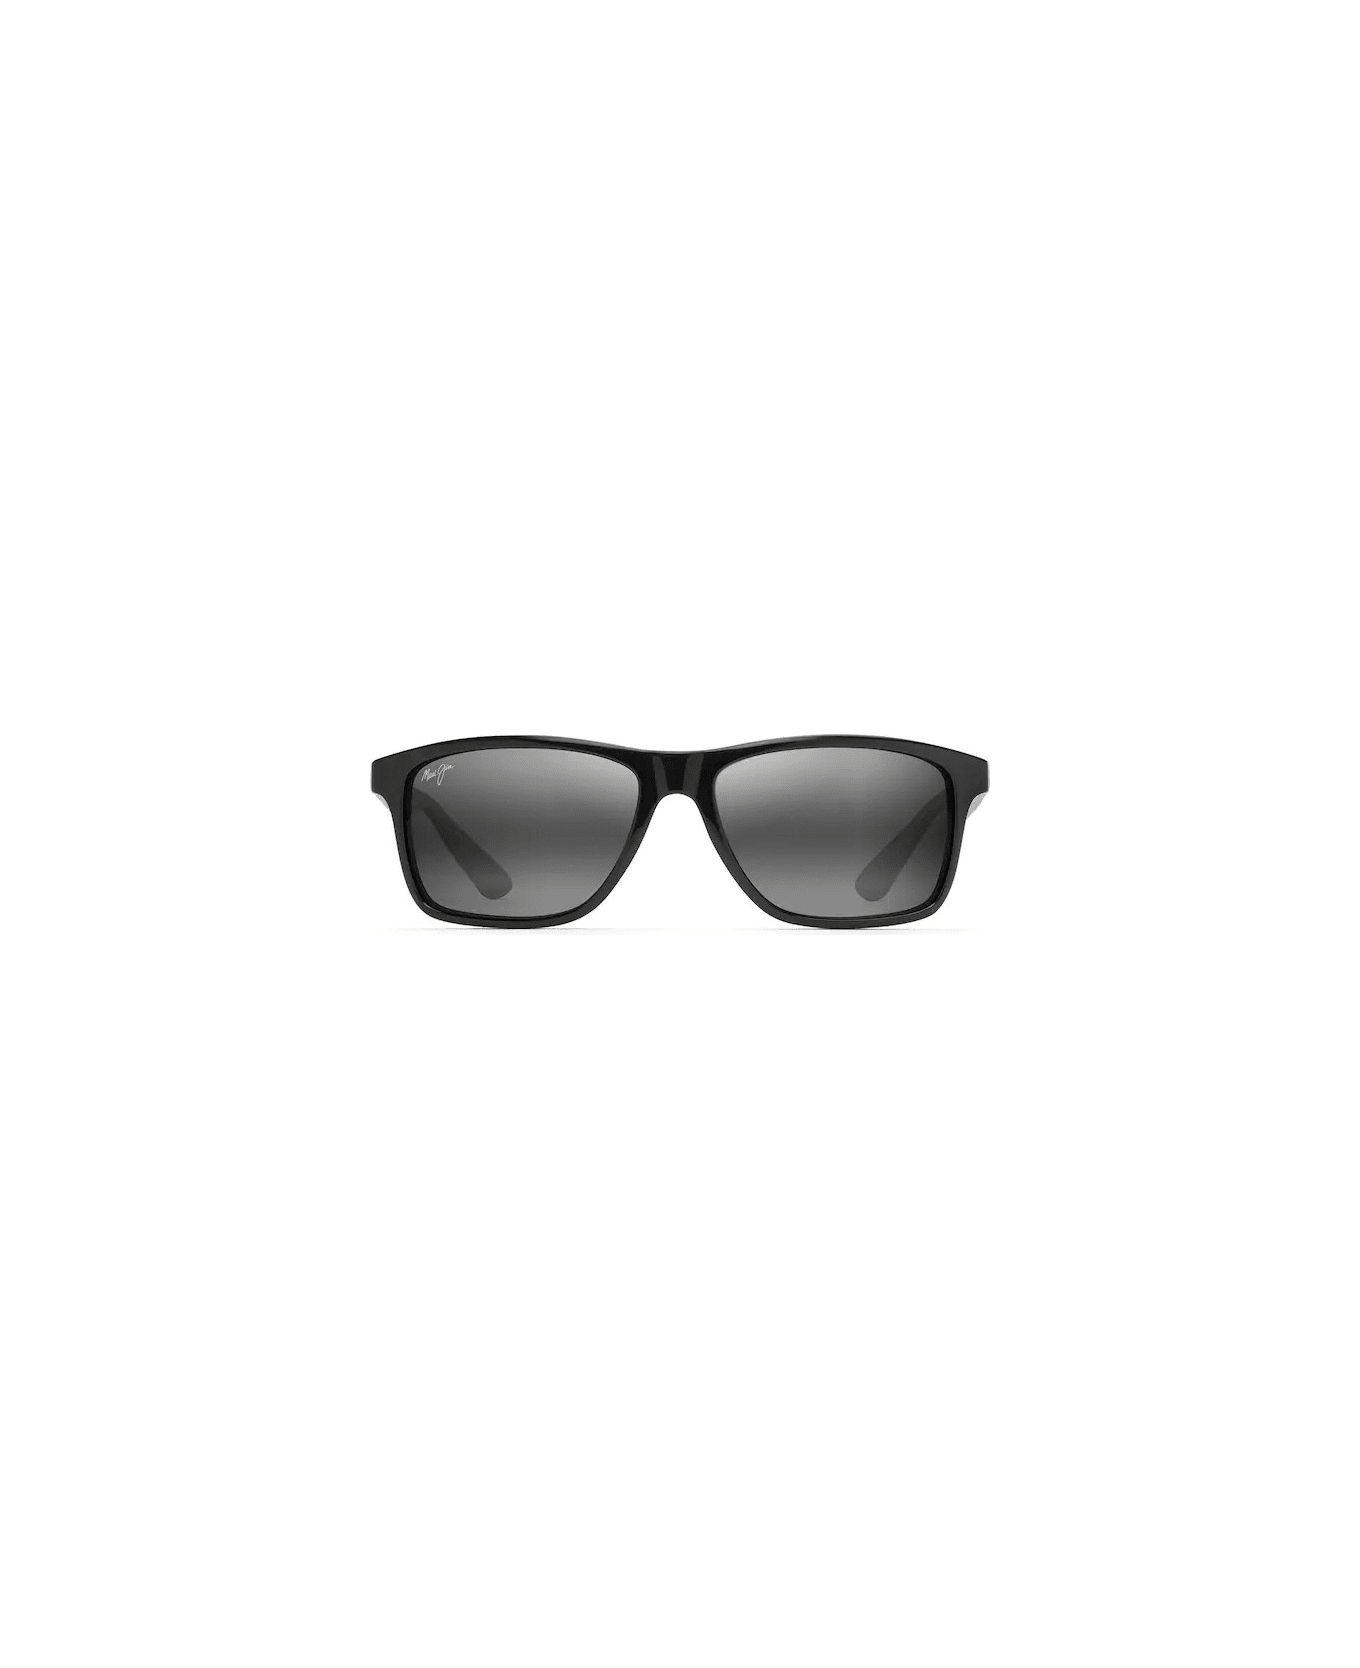 Maui Jim MJ798-02 Sunglasses - Nero サングラス